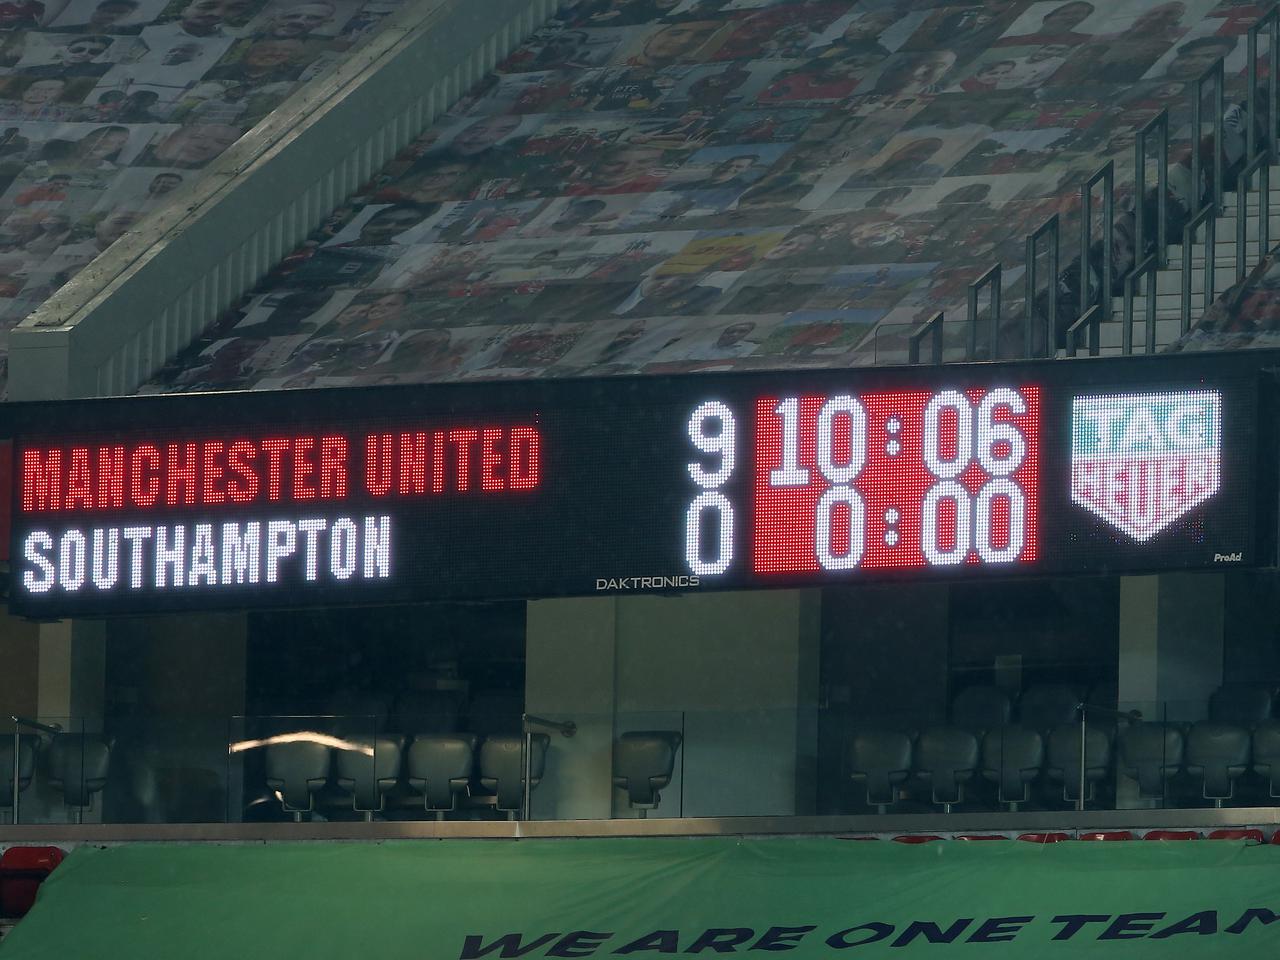 Manchester united vs southampton 9-0